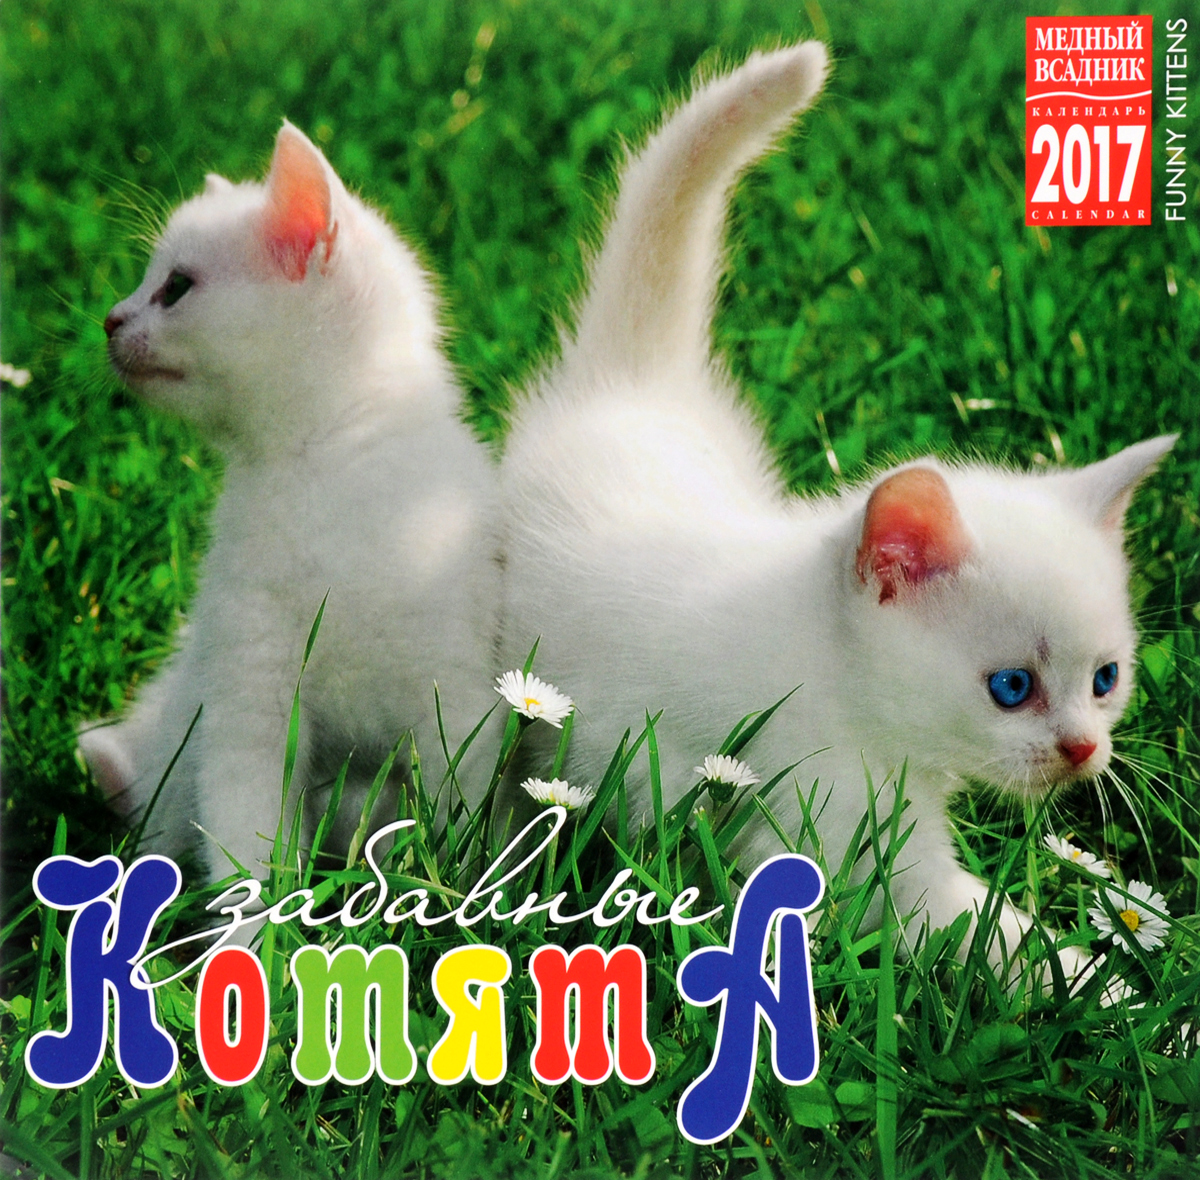 Календарь 2017 (на скрепке). Забавные котята / Funny Kittens